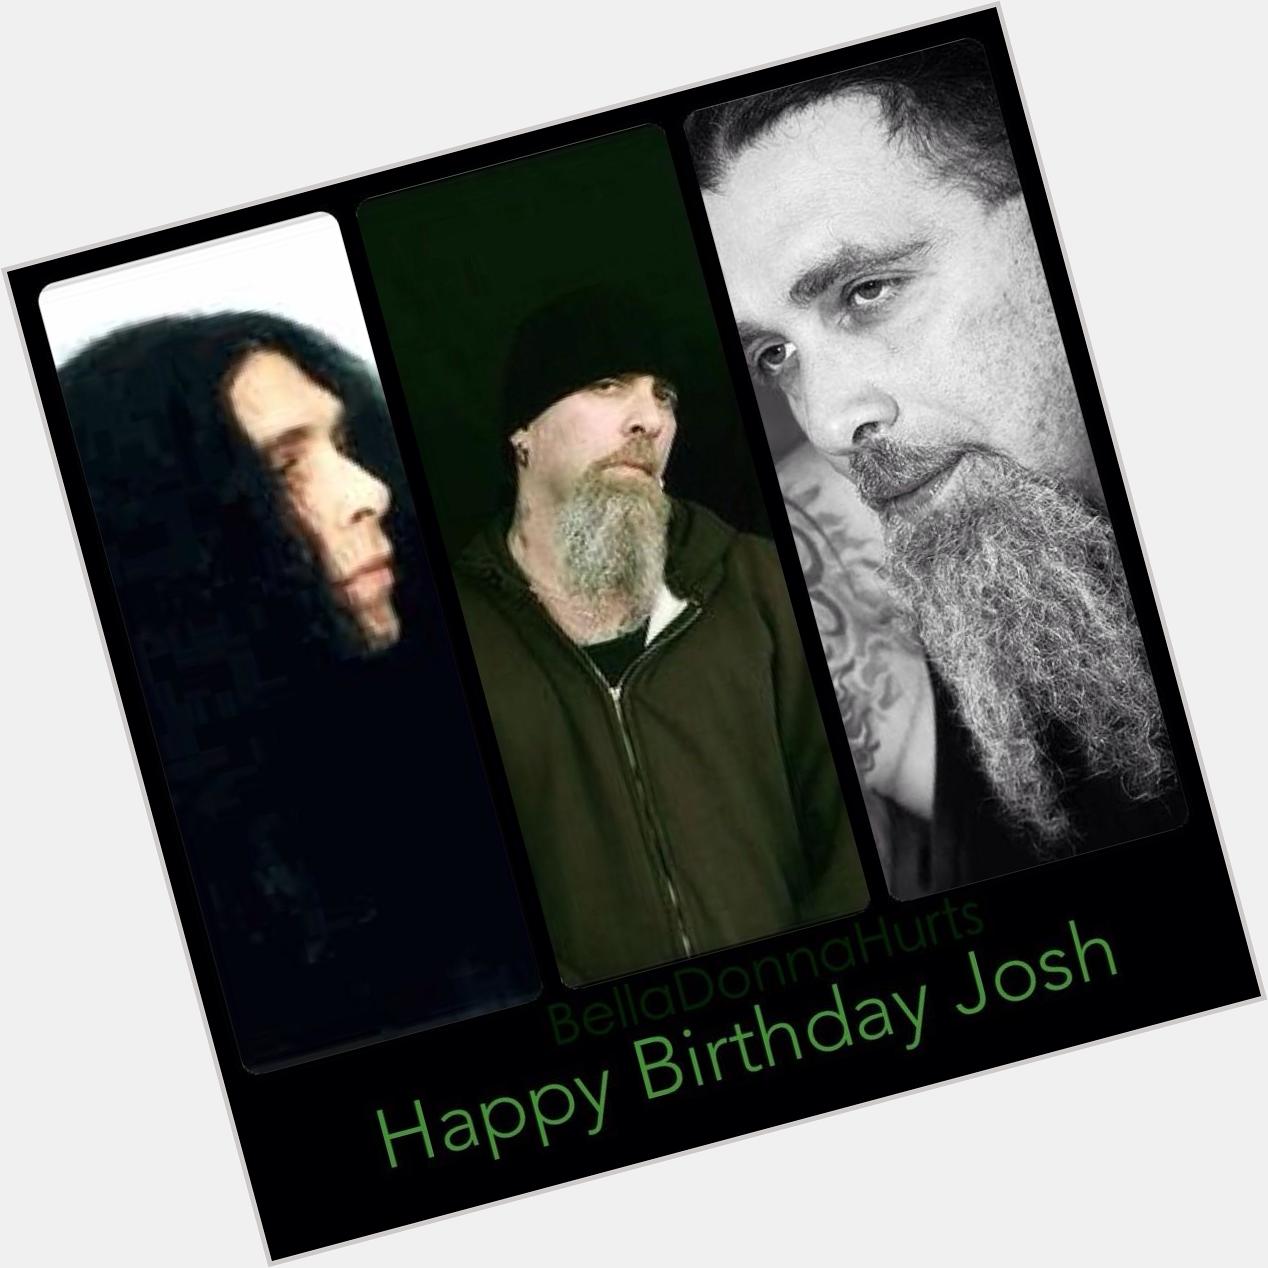  Happy Birthday Josh Silver! x 